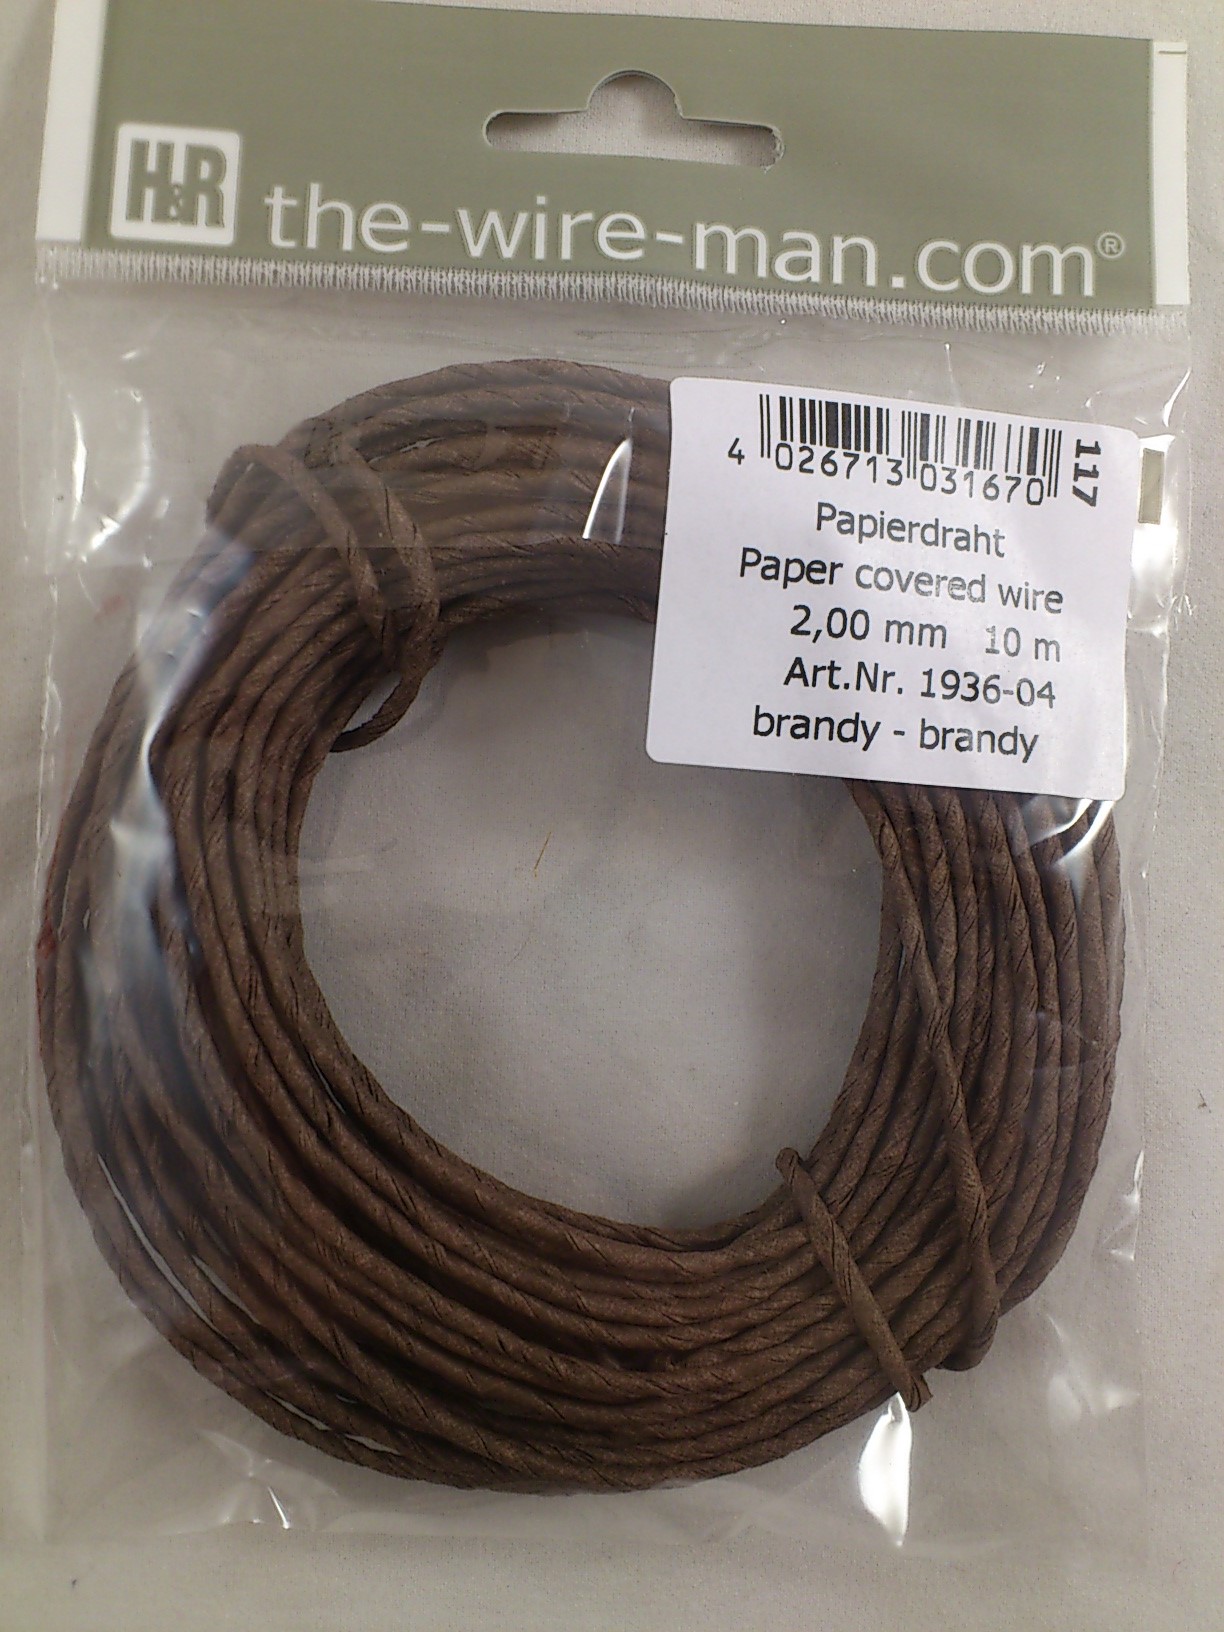 Paper wire 10 m. brandy